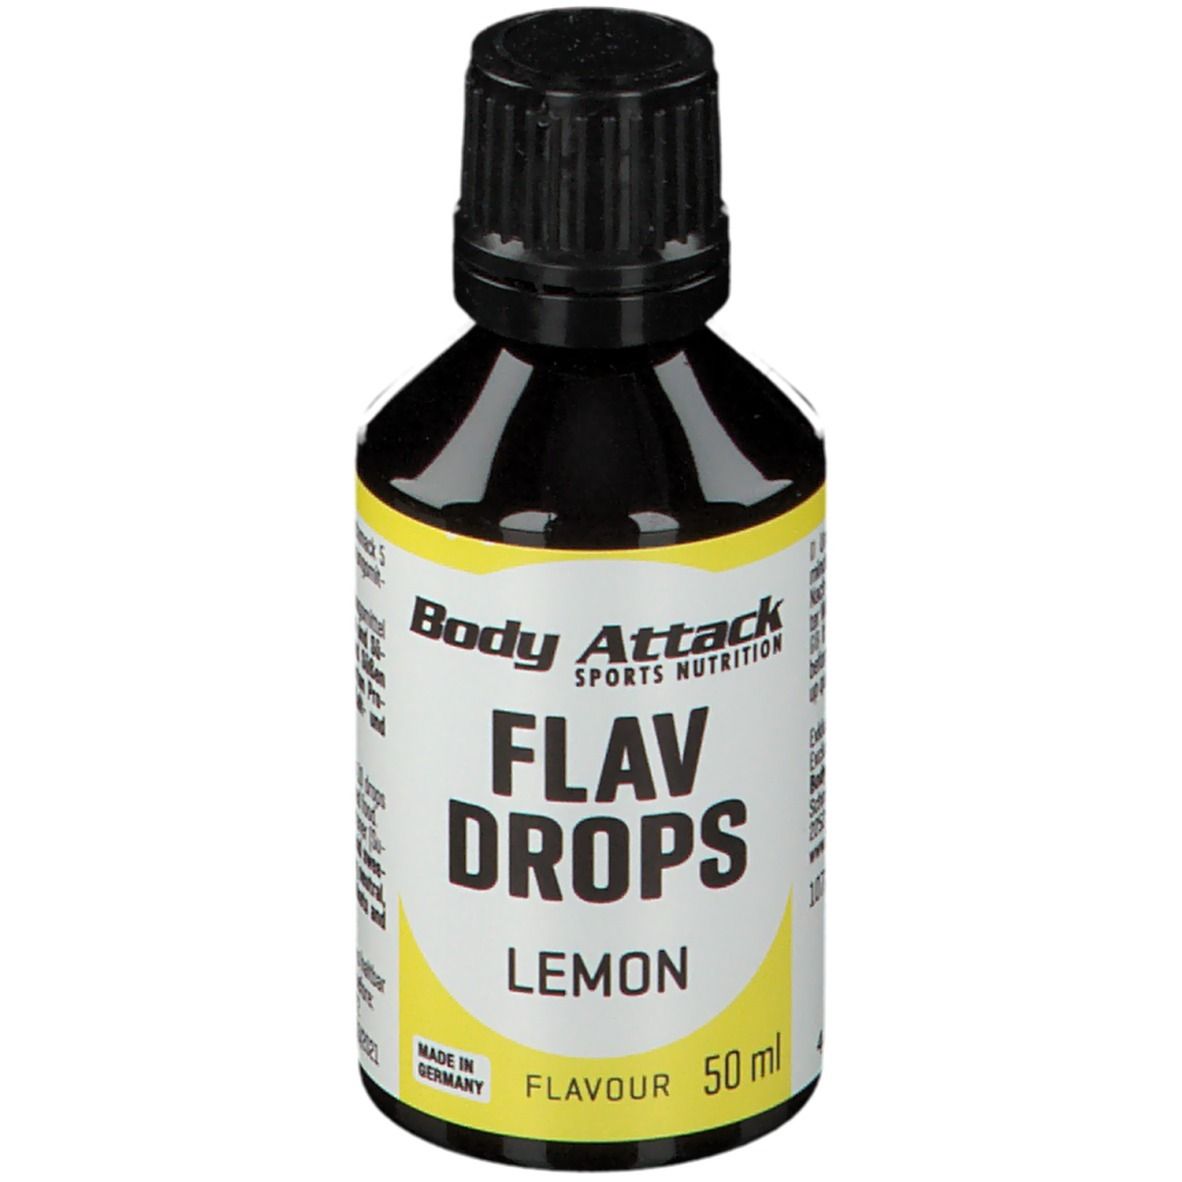 Image of Body Attack Flav Drops Lemon